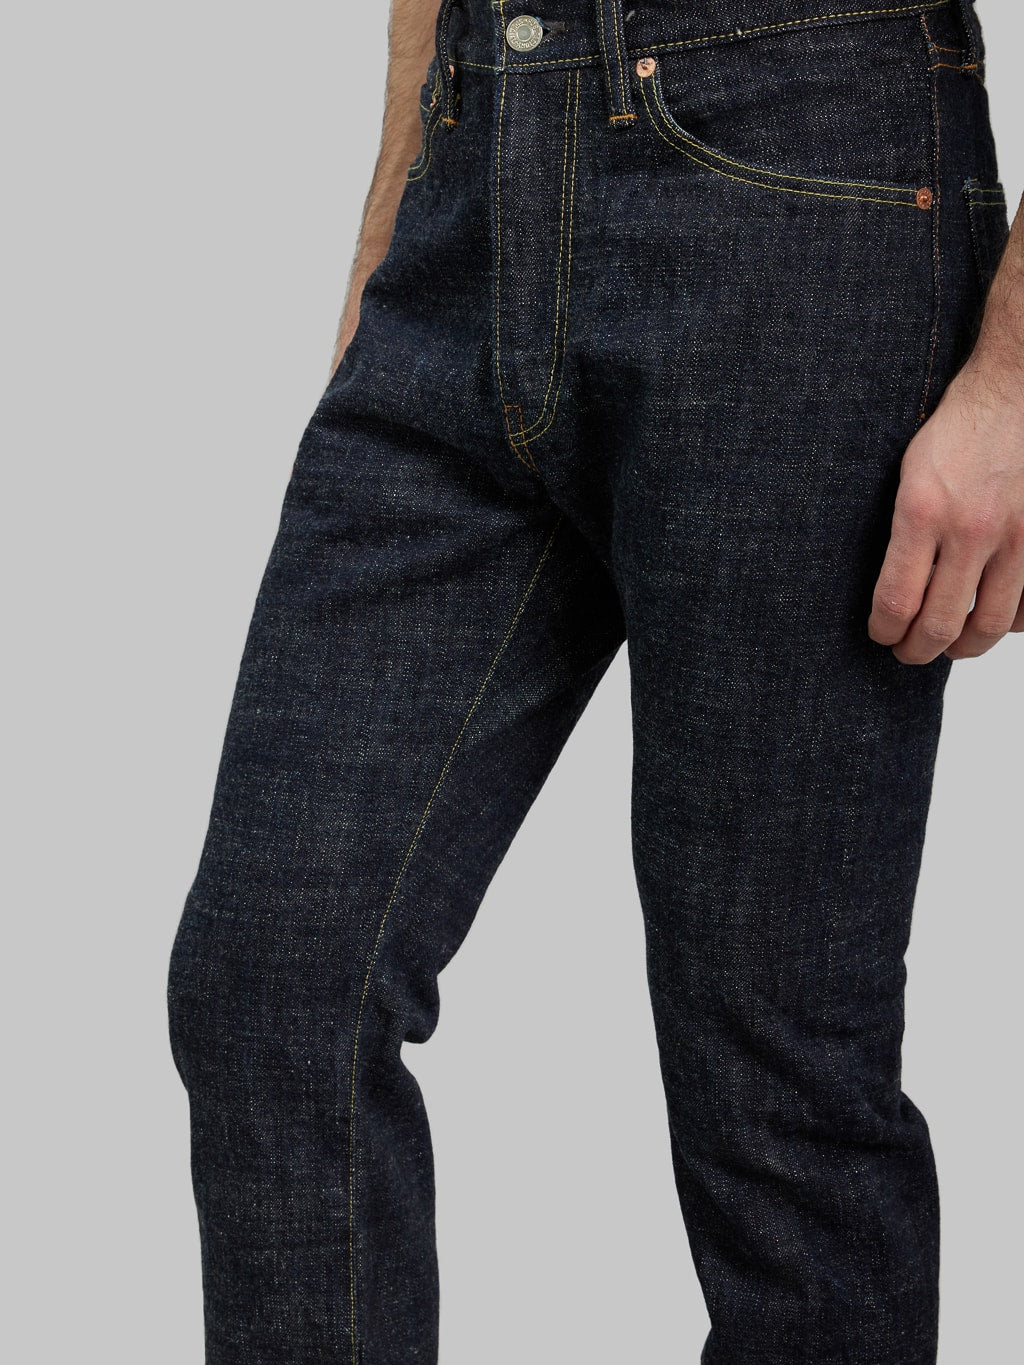 Fob factory slim straight jean inseam leg detail